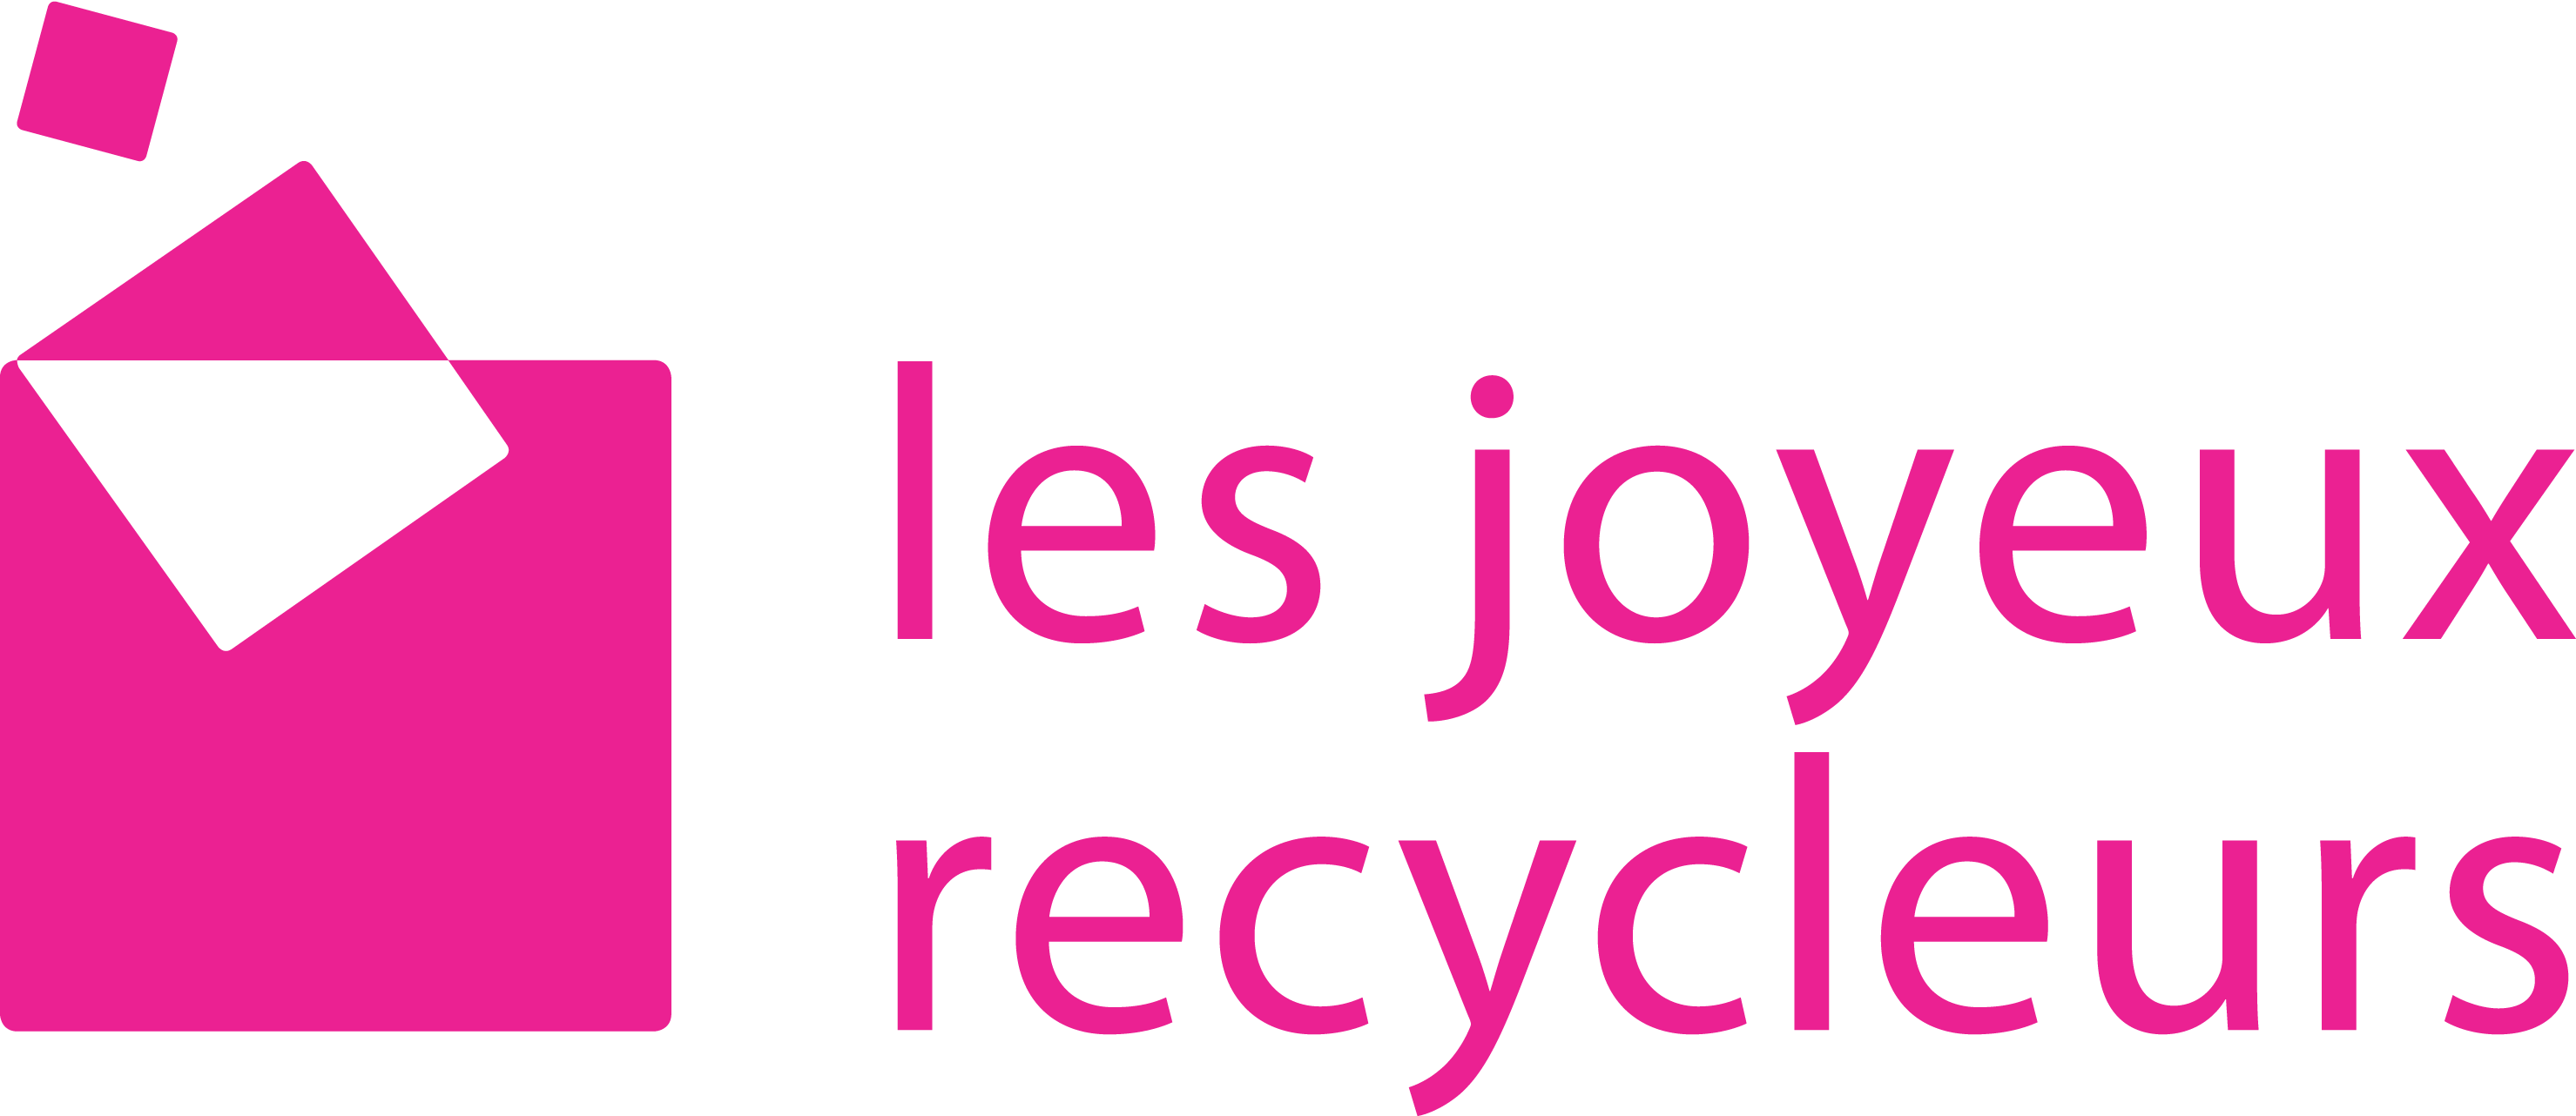 Ares_-_logo_-_Joyeux_Recycleurs